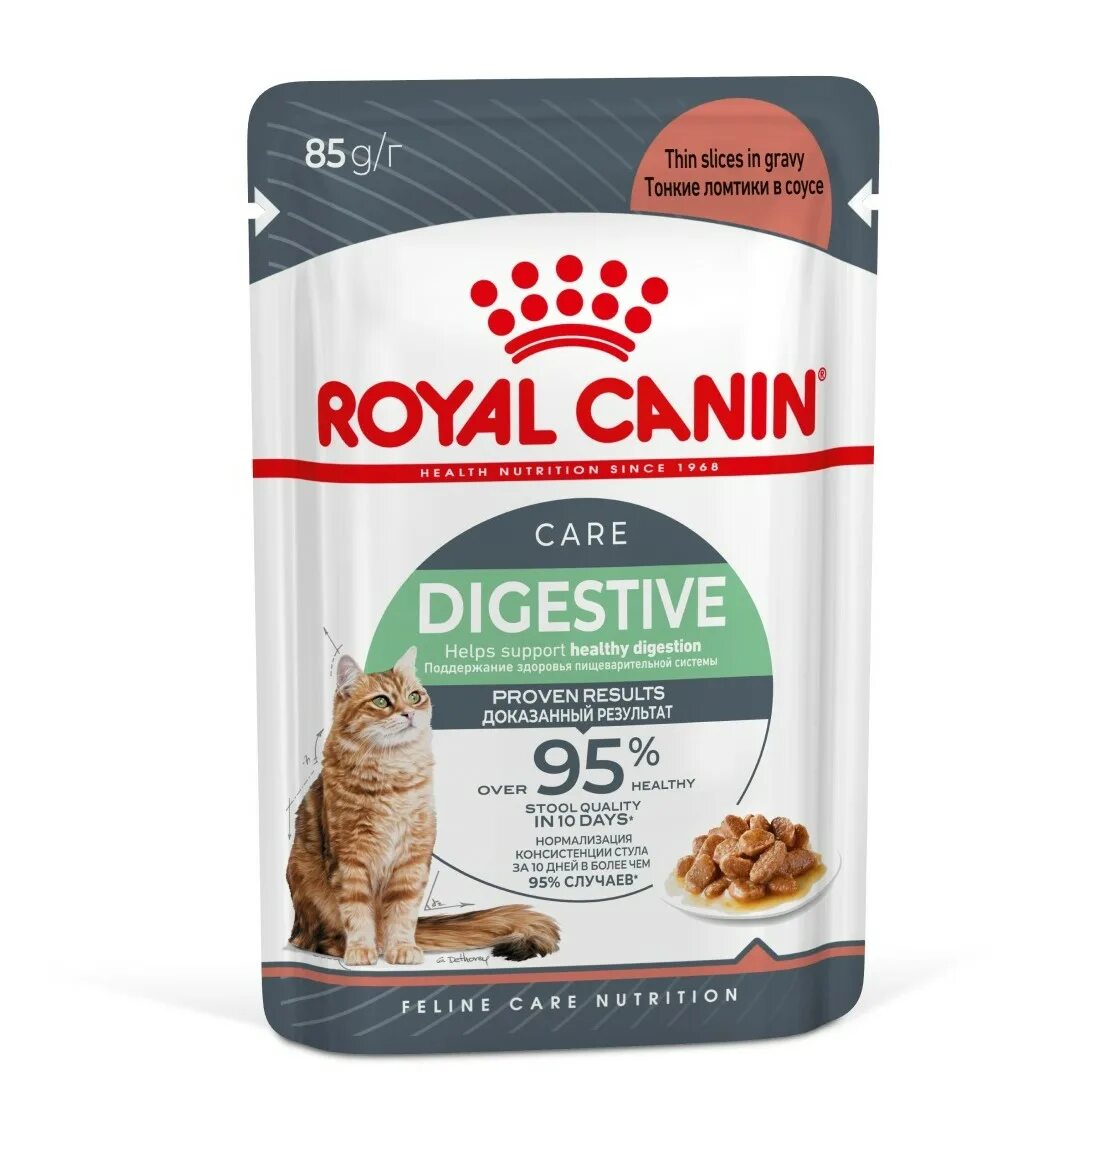 Royal canin digestive для кошек. Royal Canin Digest sensitive. Royal Canin Hairball Care Gravy 12*85g. Роял Канин Диджестив в соусе. Royal Canin Sterilised Jelly 12*85g.